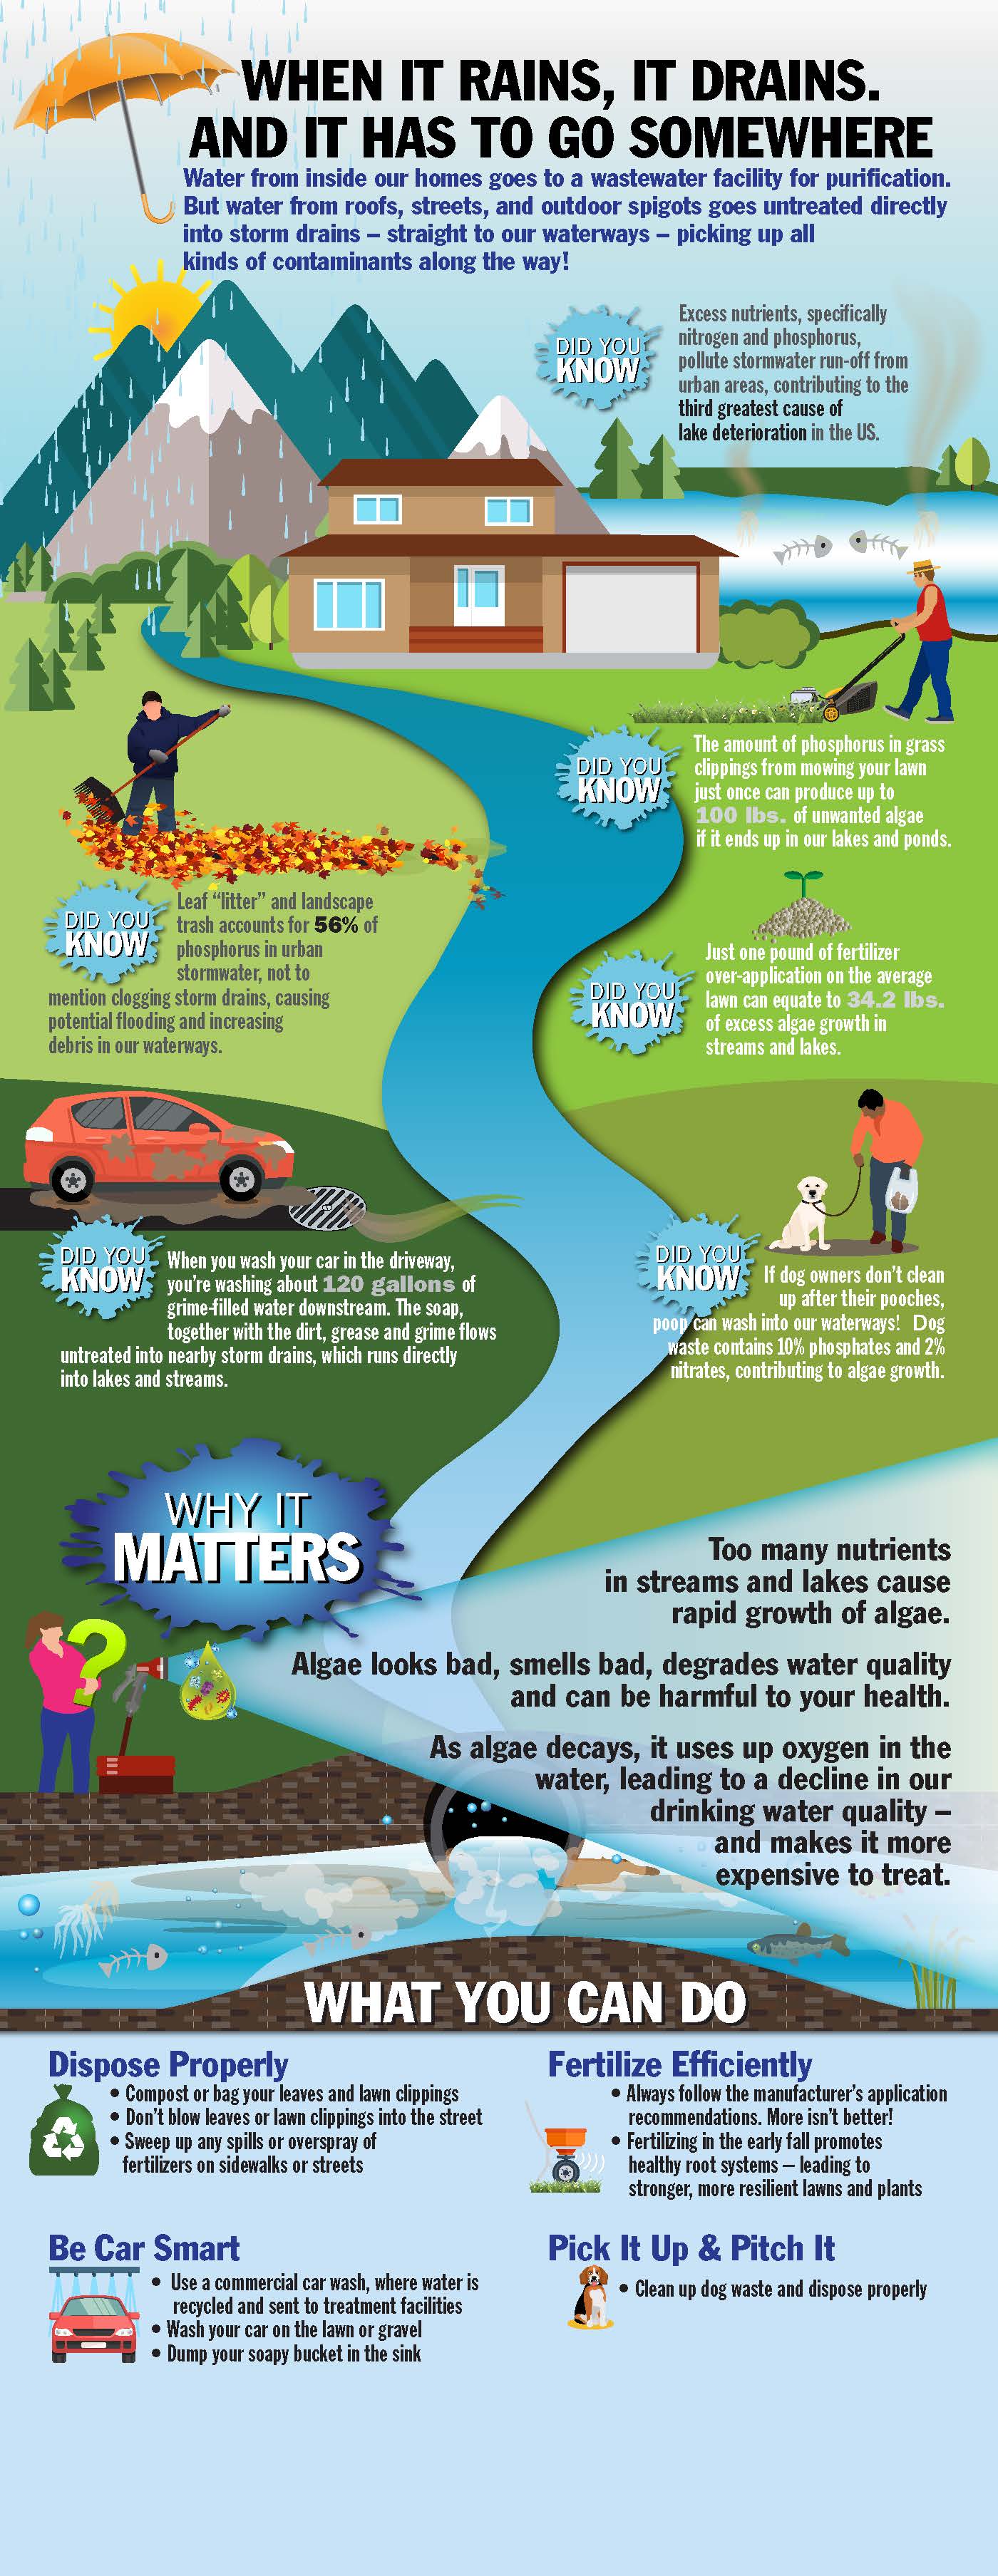 Stormwater Information